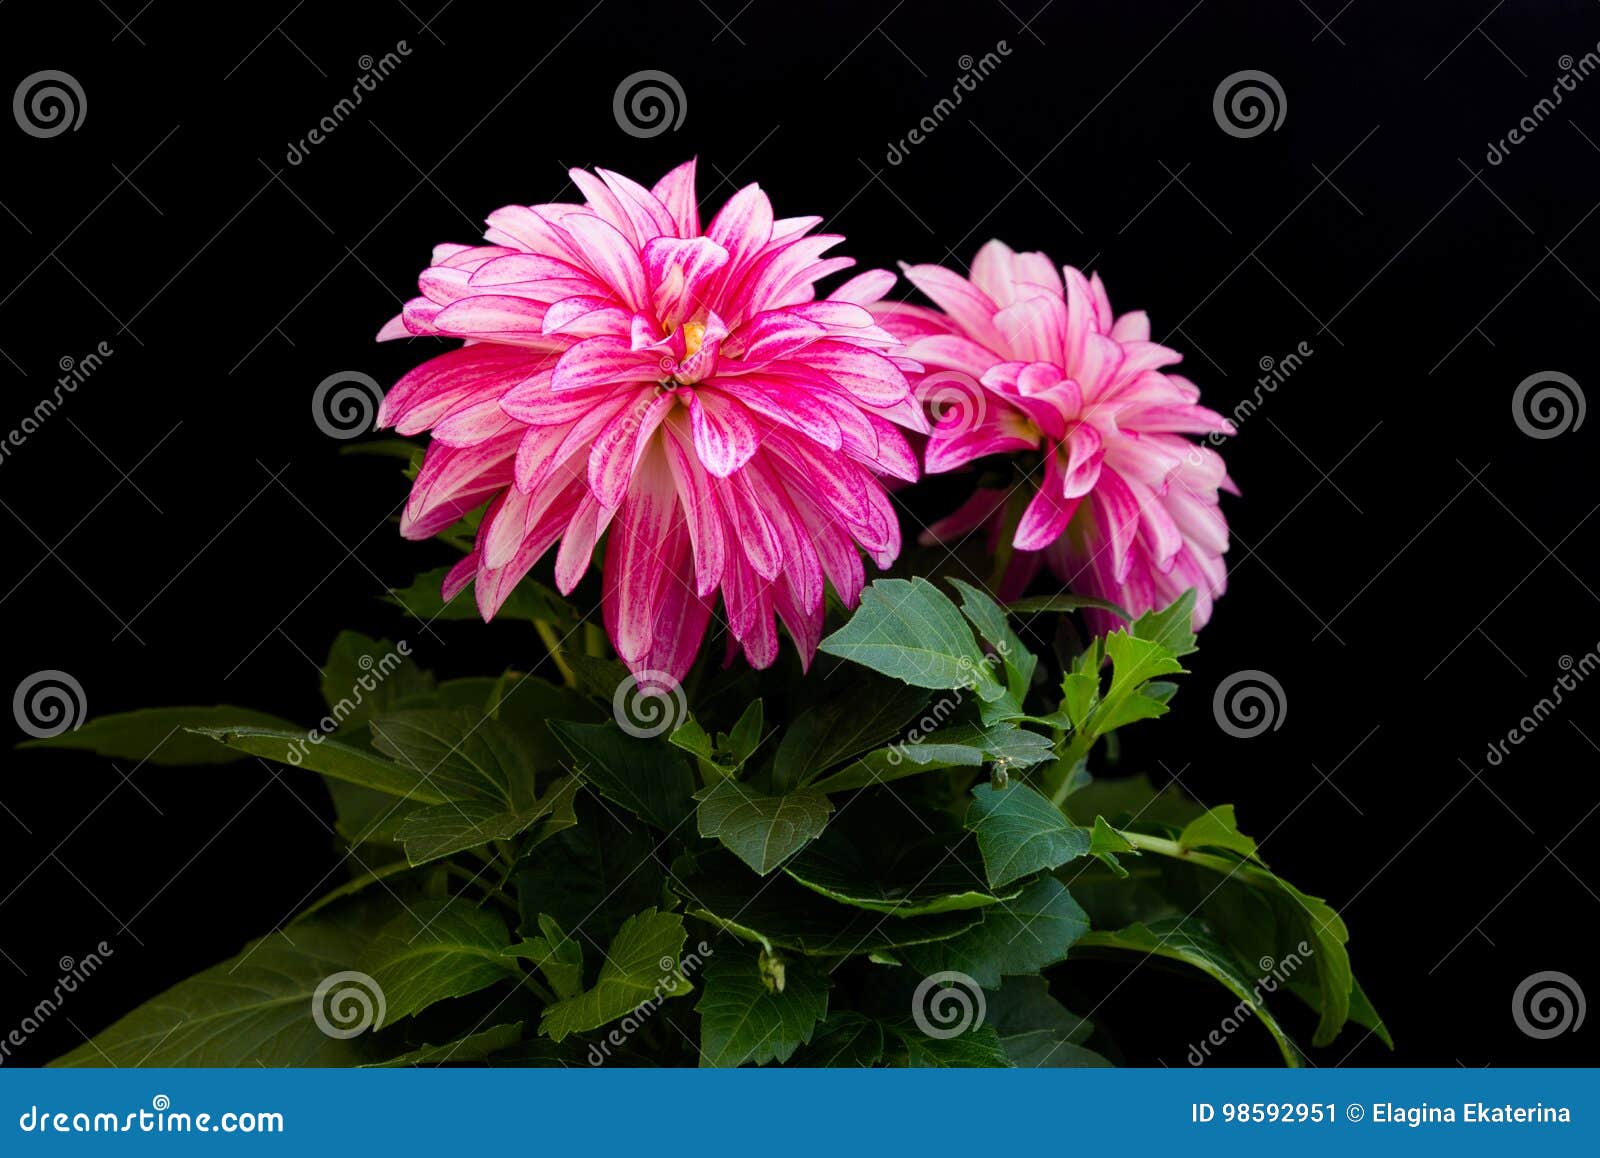 Beautiful Pink Dahlia on a Black Background Stock Image - Image of ...